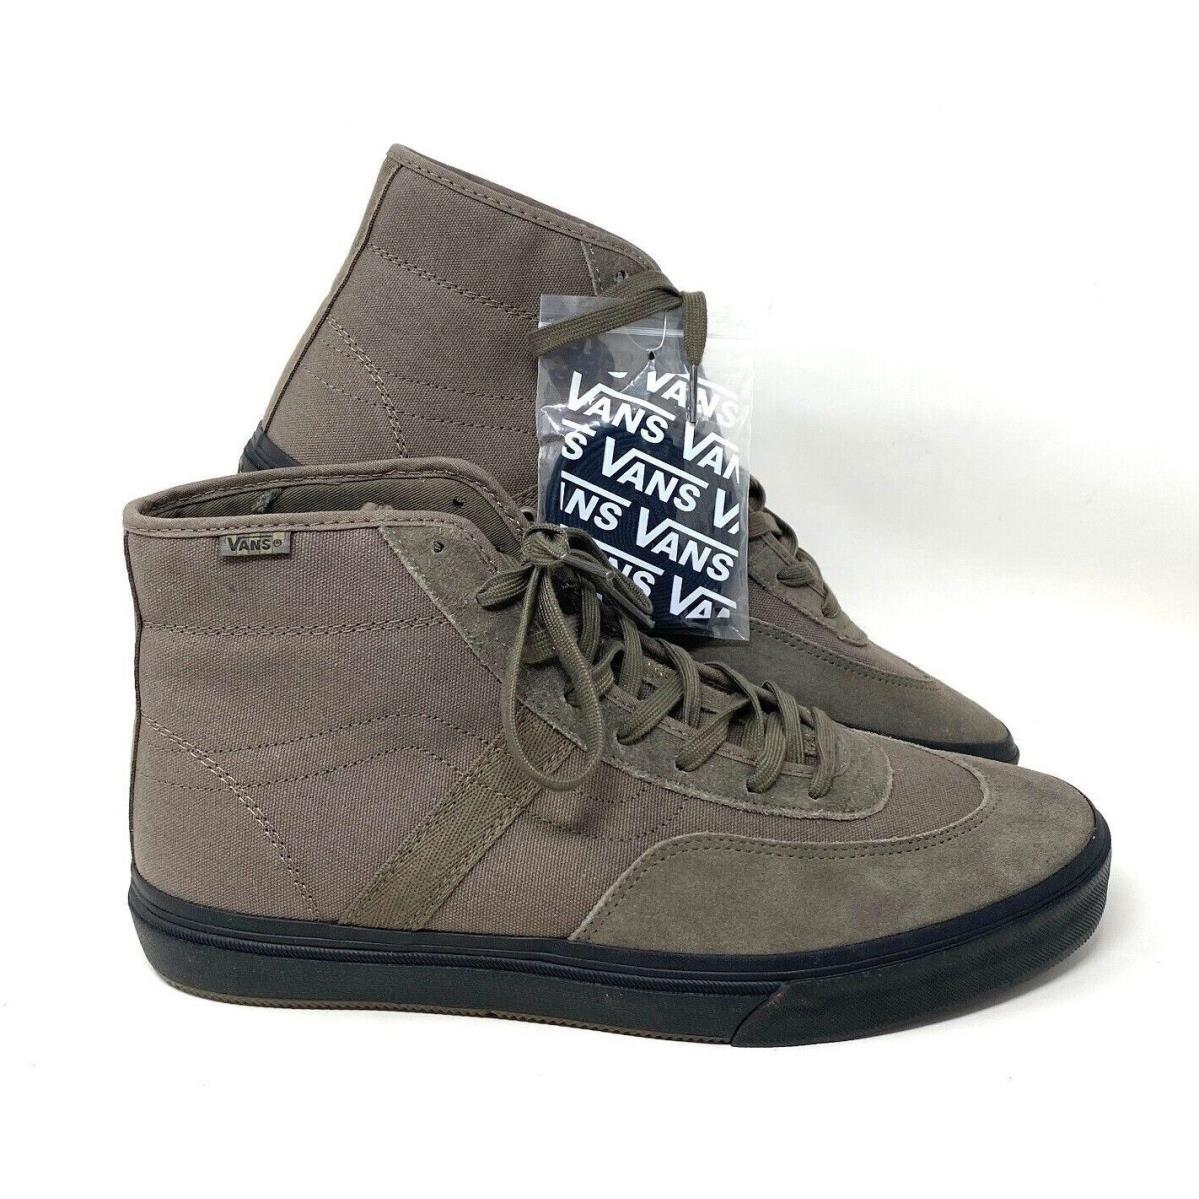 Vans Crockett High Skate Brown Green Suede Shoes Men`s Size Sneakers VN0A5JIG85C